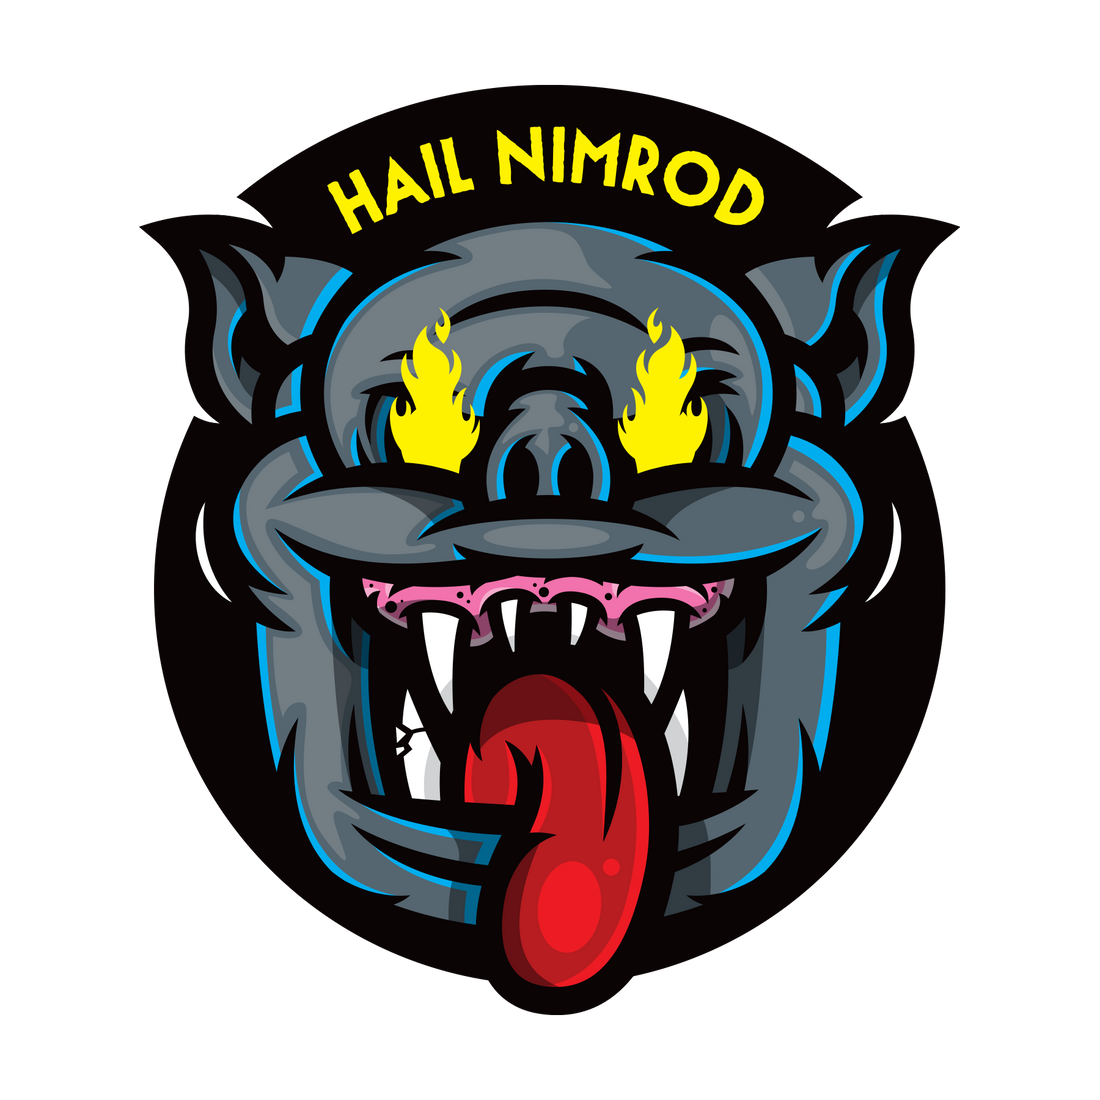 Hail Nimrod! (Kid Voice) Ringtone (for iPhone users)